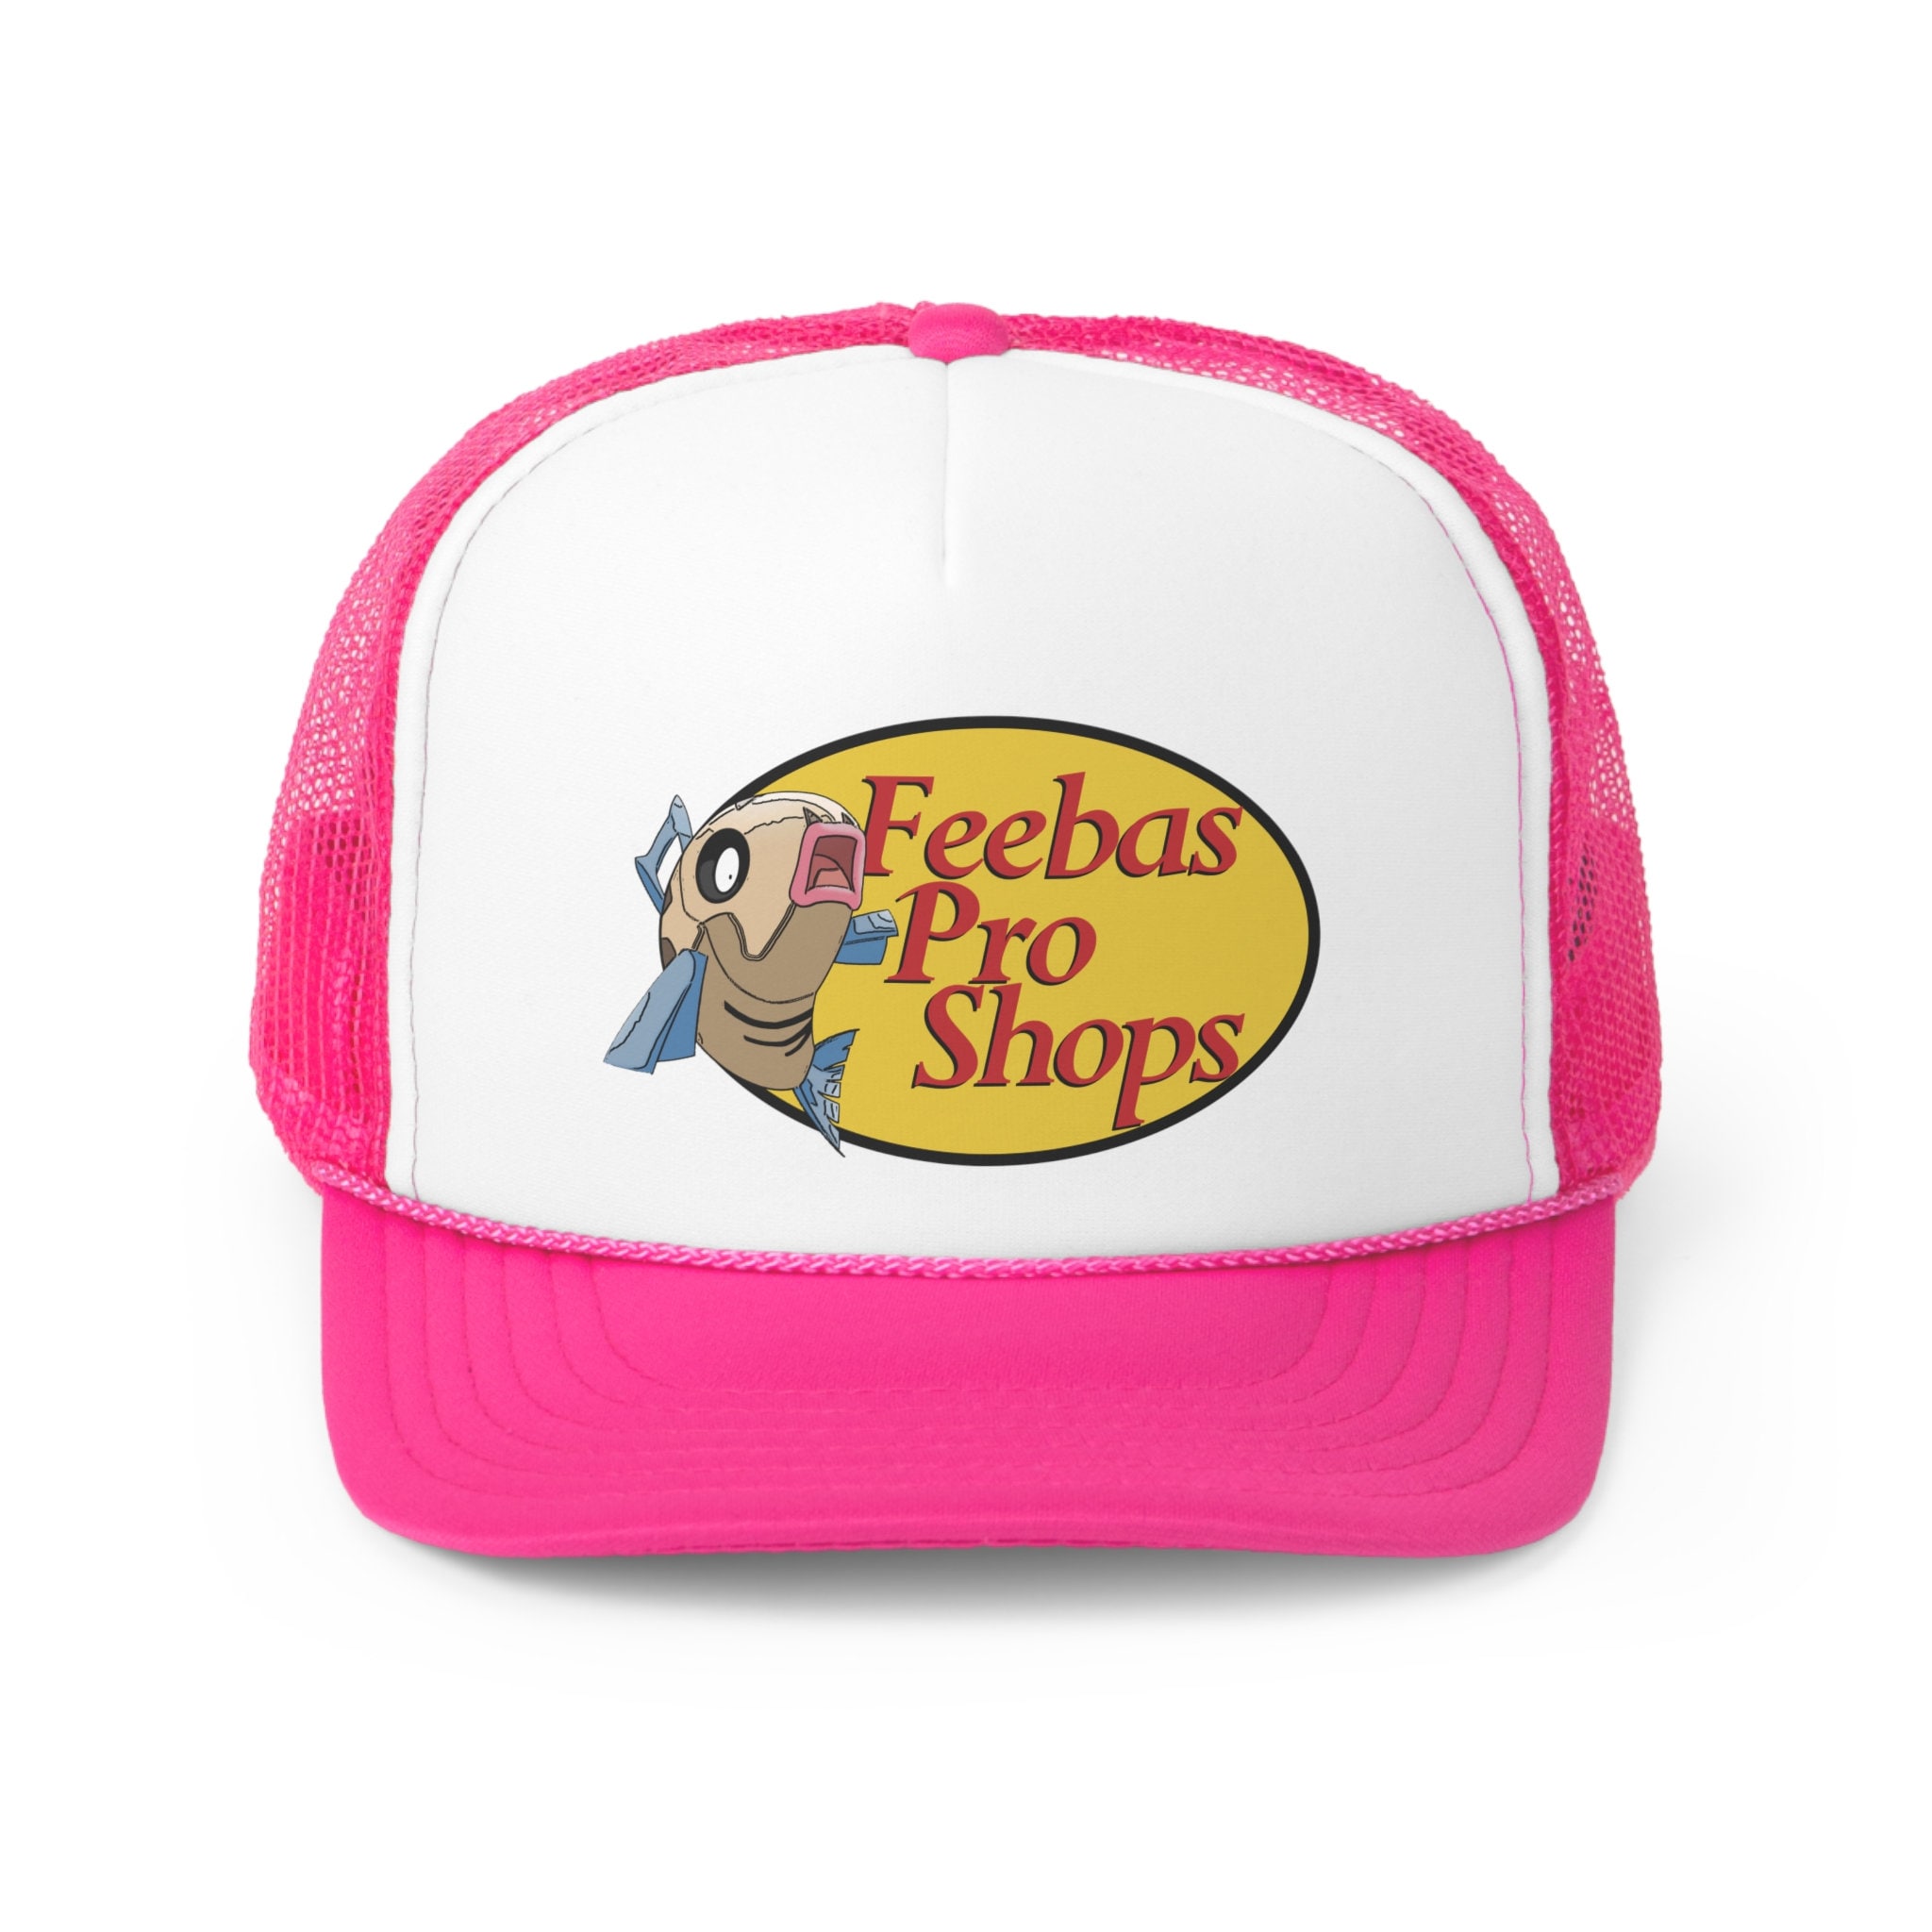 Feebas Pro Shops Trucker Caps 